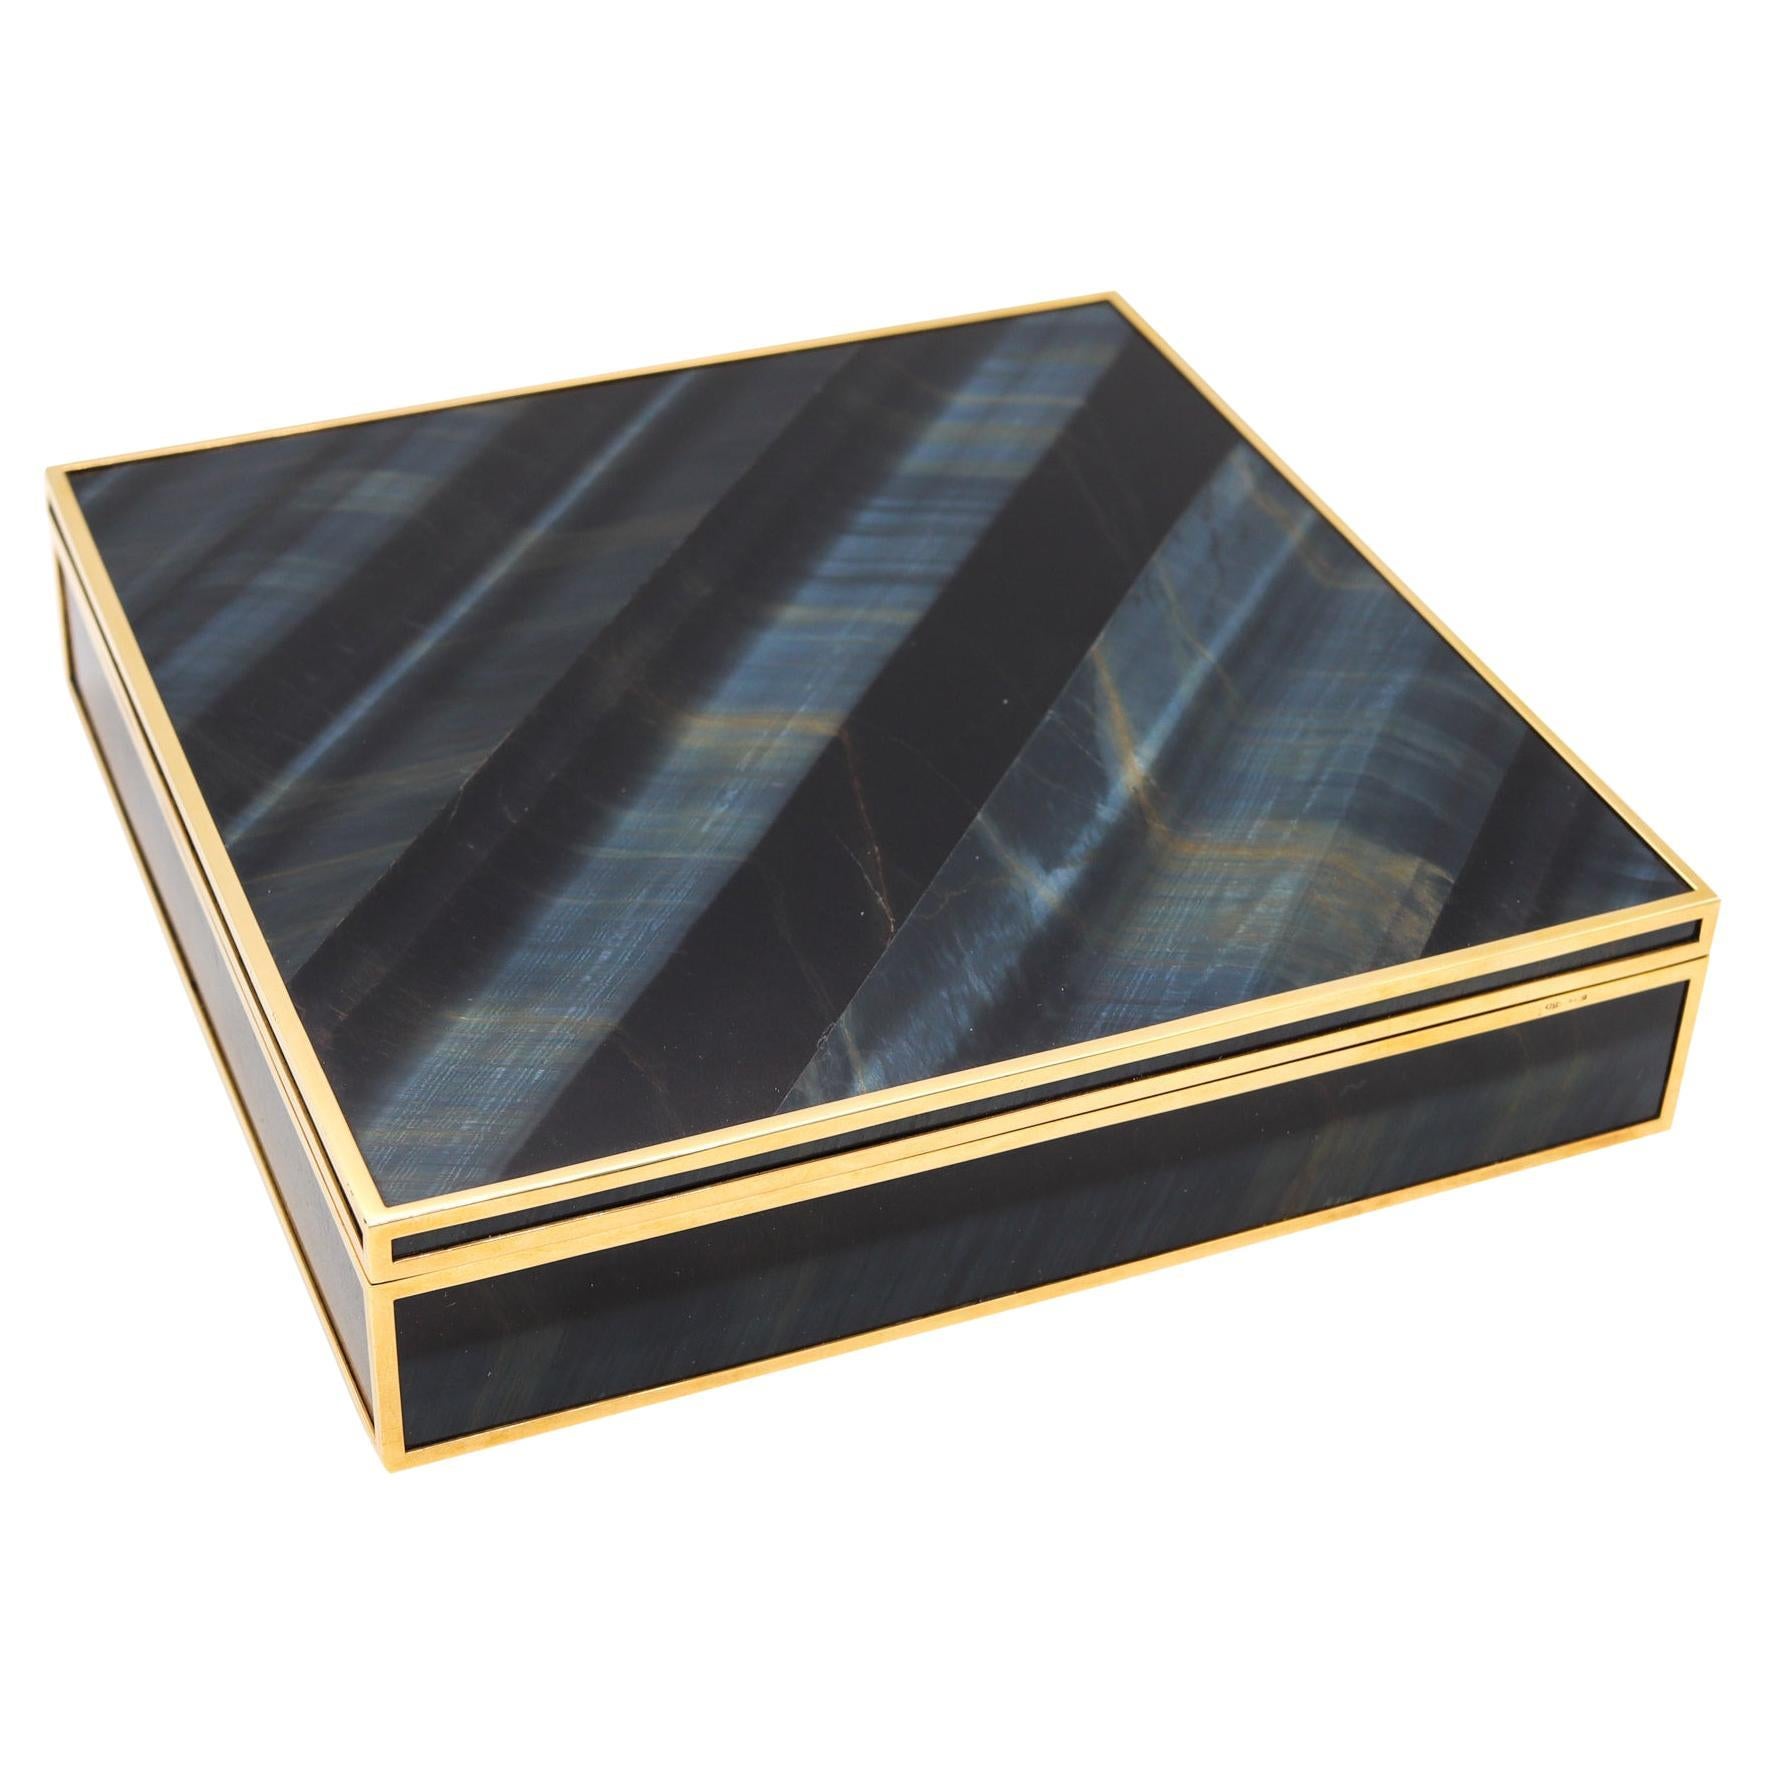 Fasano Torino Luxury Desk Box in 18kt Yellow Gold with Rare Blue Hawk Eye Quartz